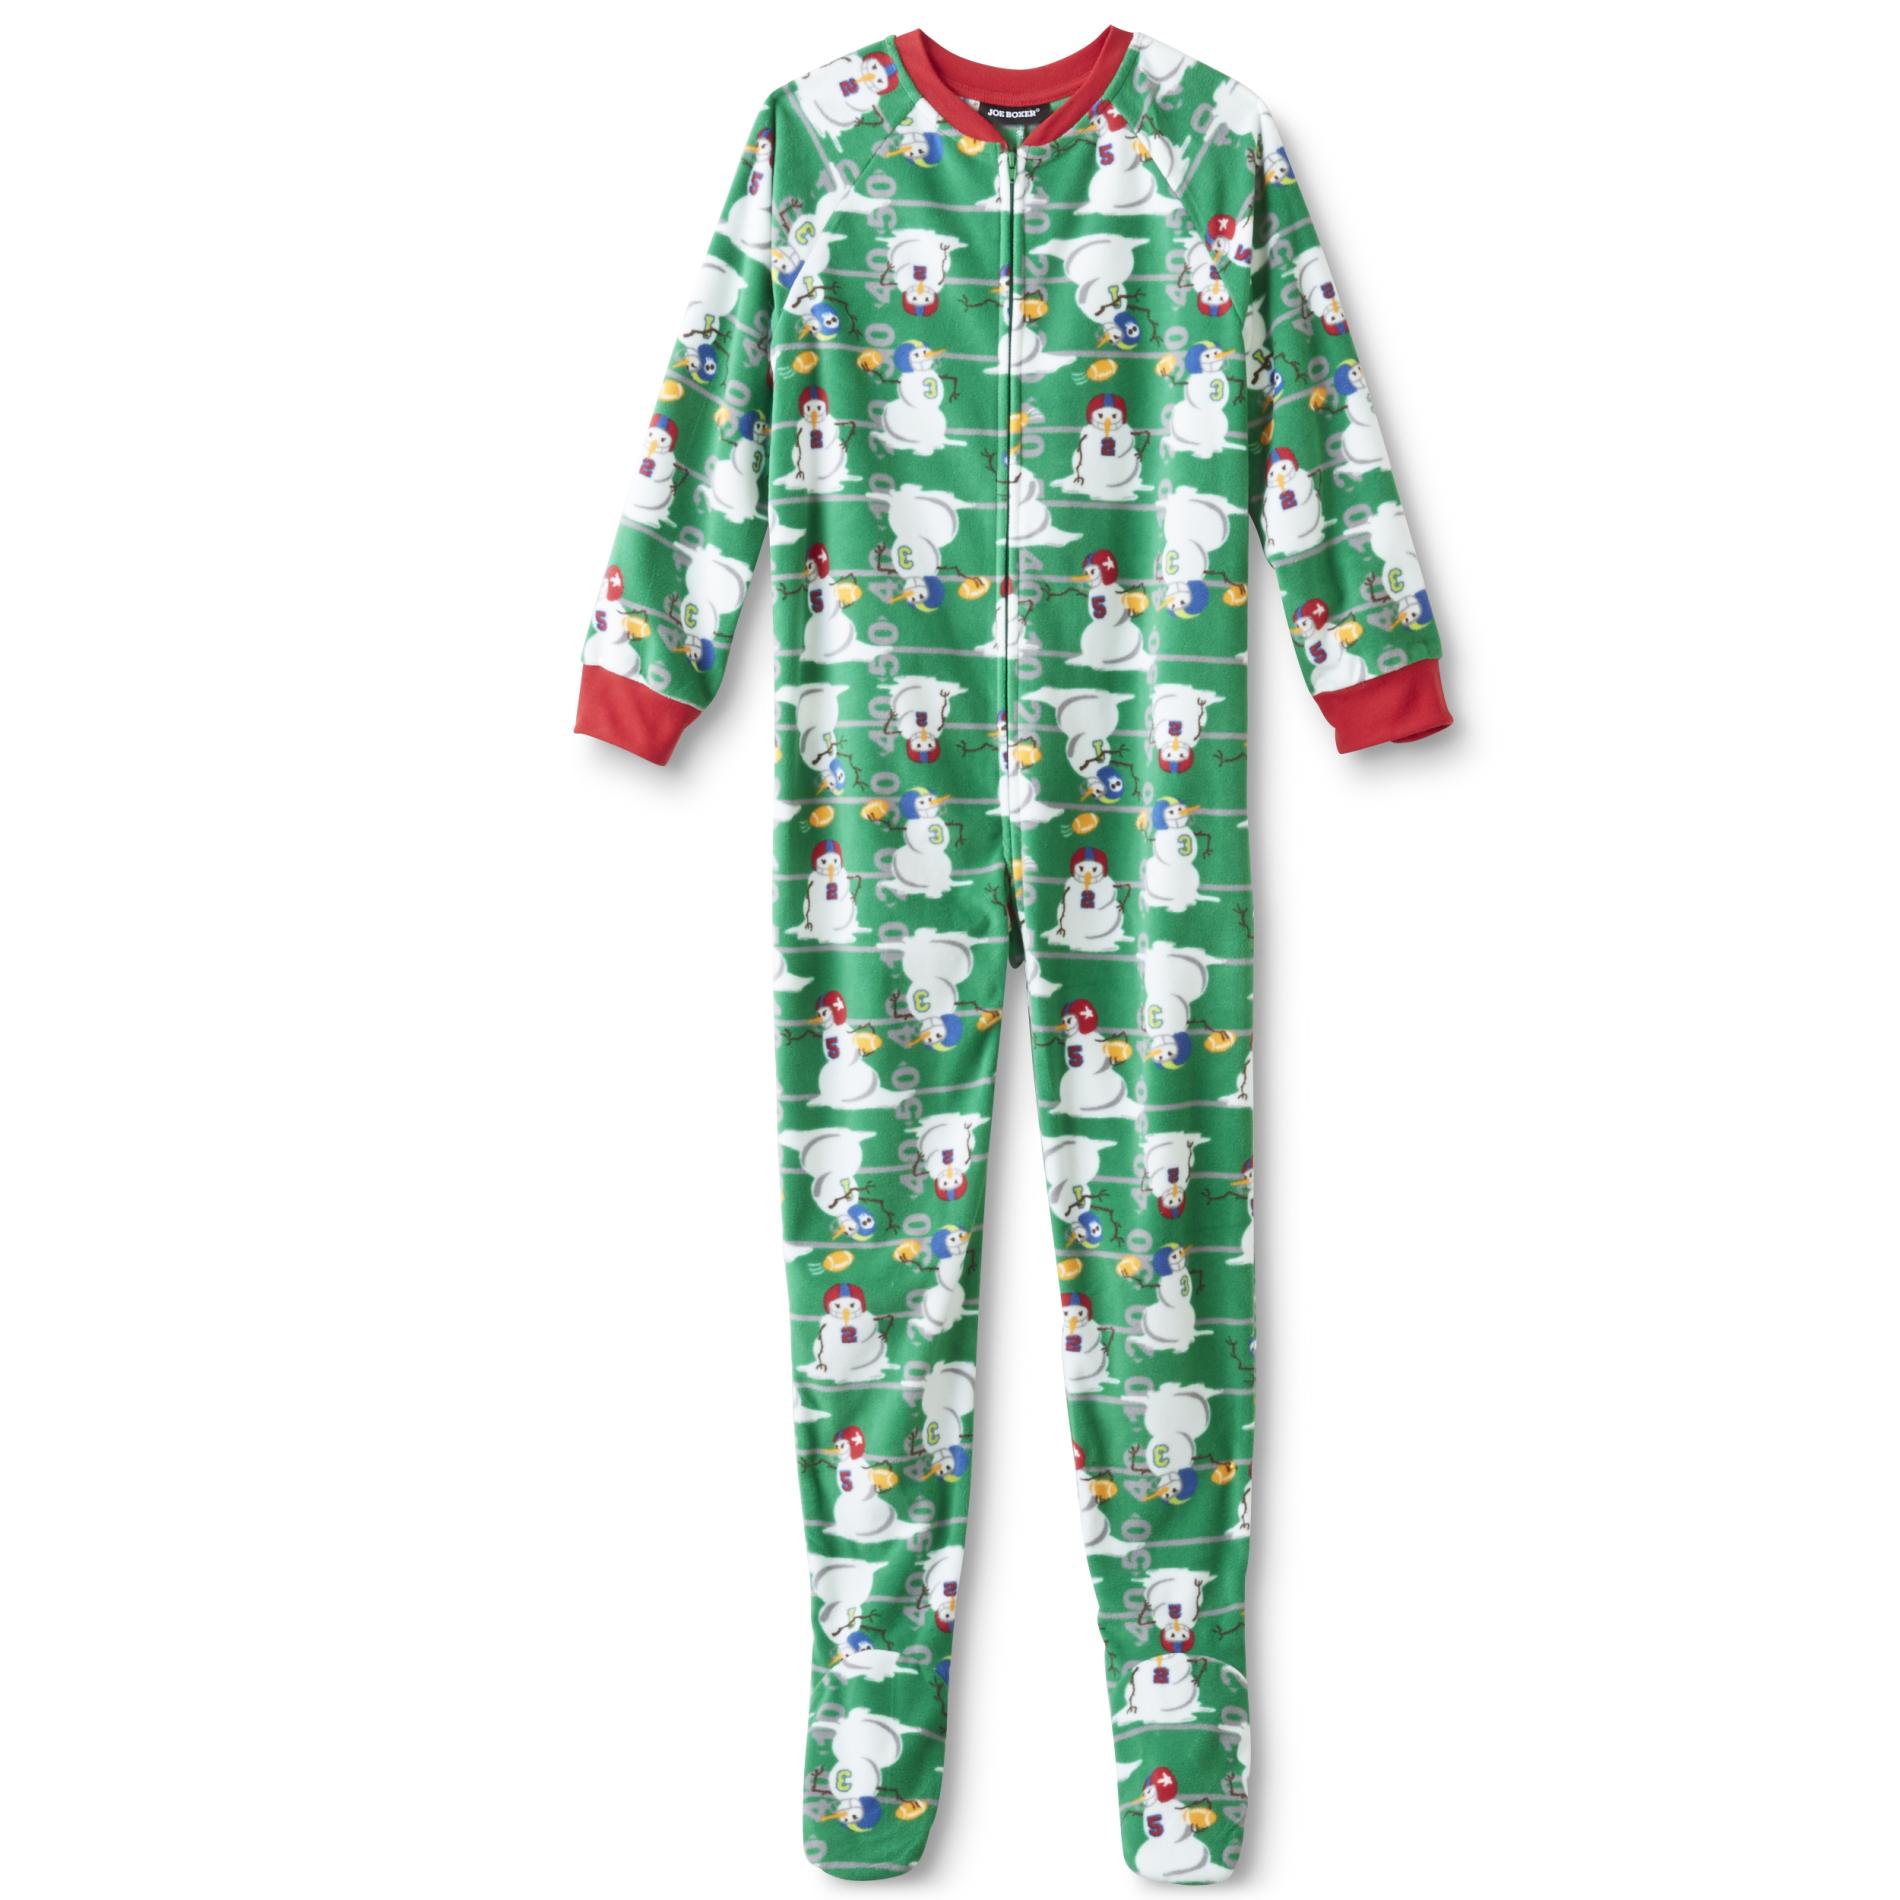 Joe Boxer Boys' One-Piece Microfleece Pajamas - Snowman Football